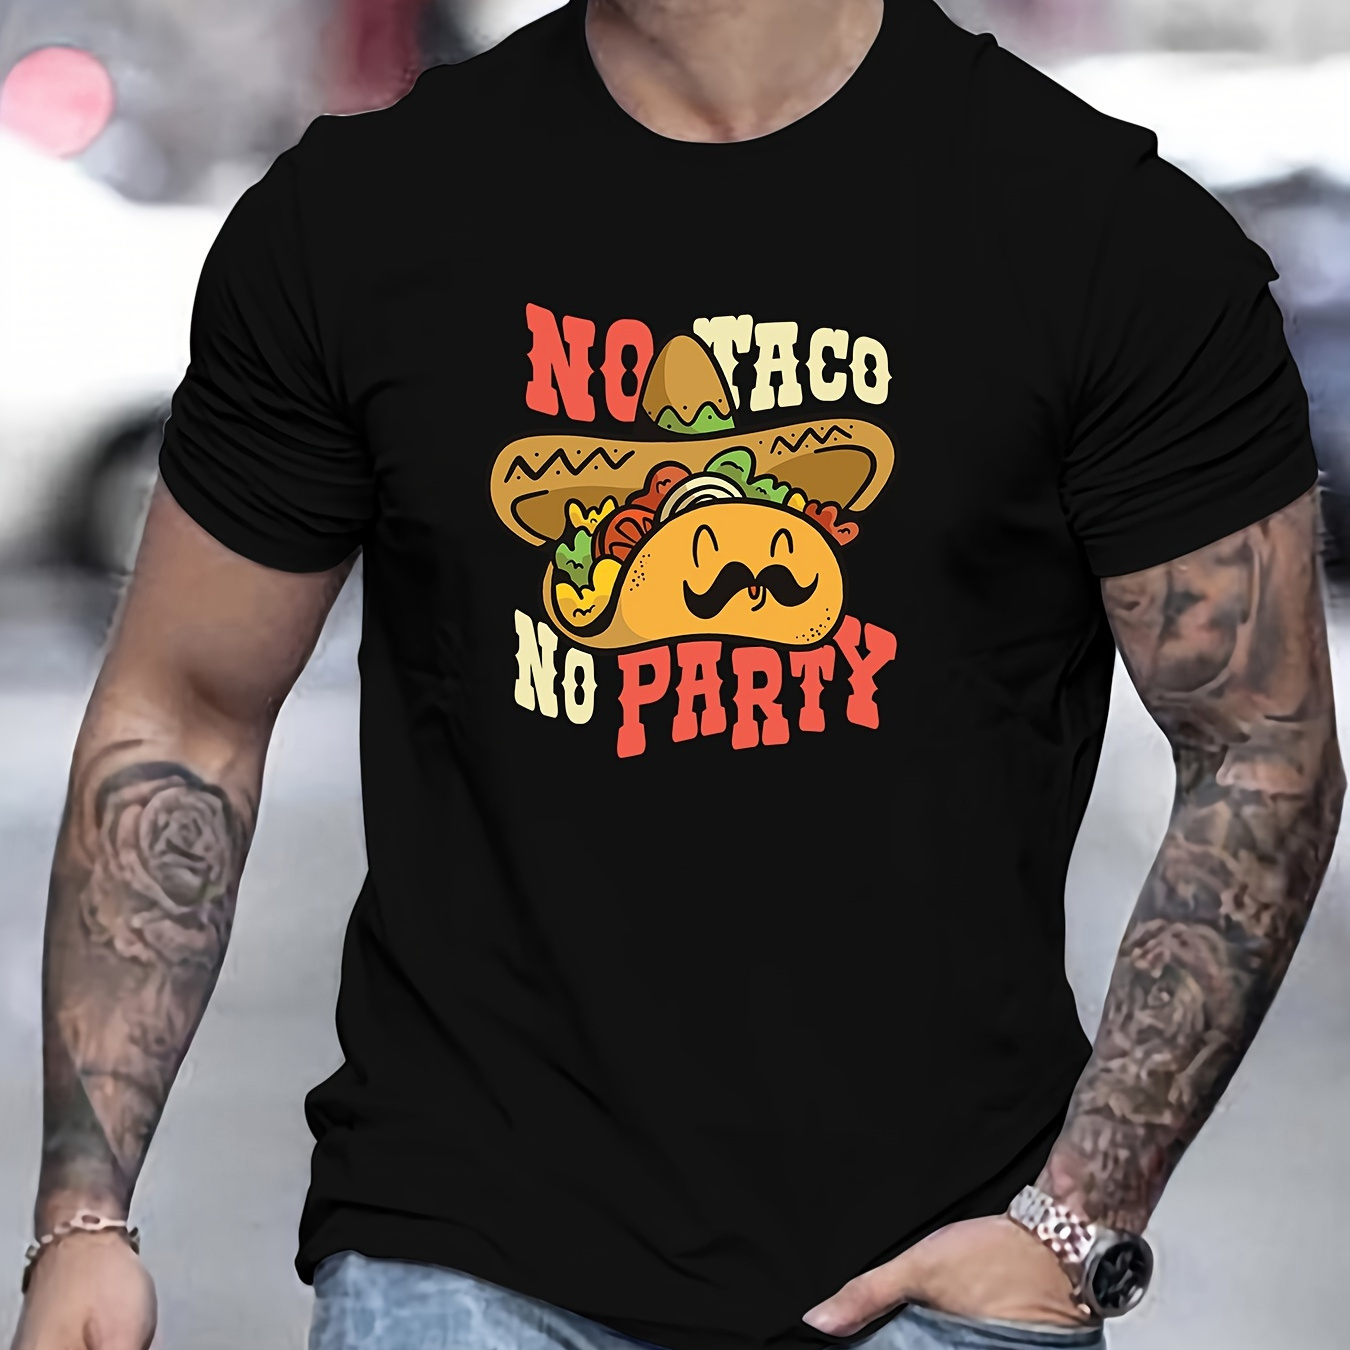 

No Taco No Party Print T Shirt, Tees For Men, Casual Short Sleeve T-shirt For Summer